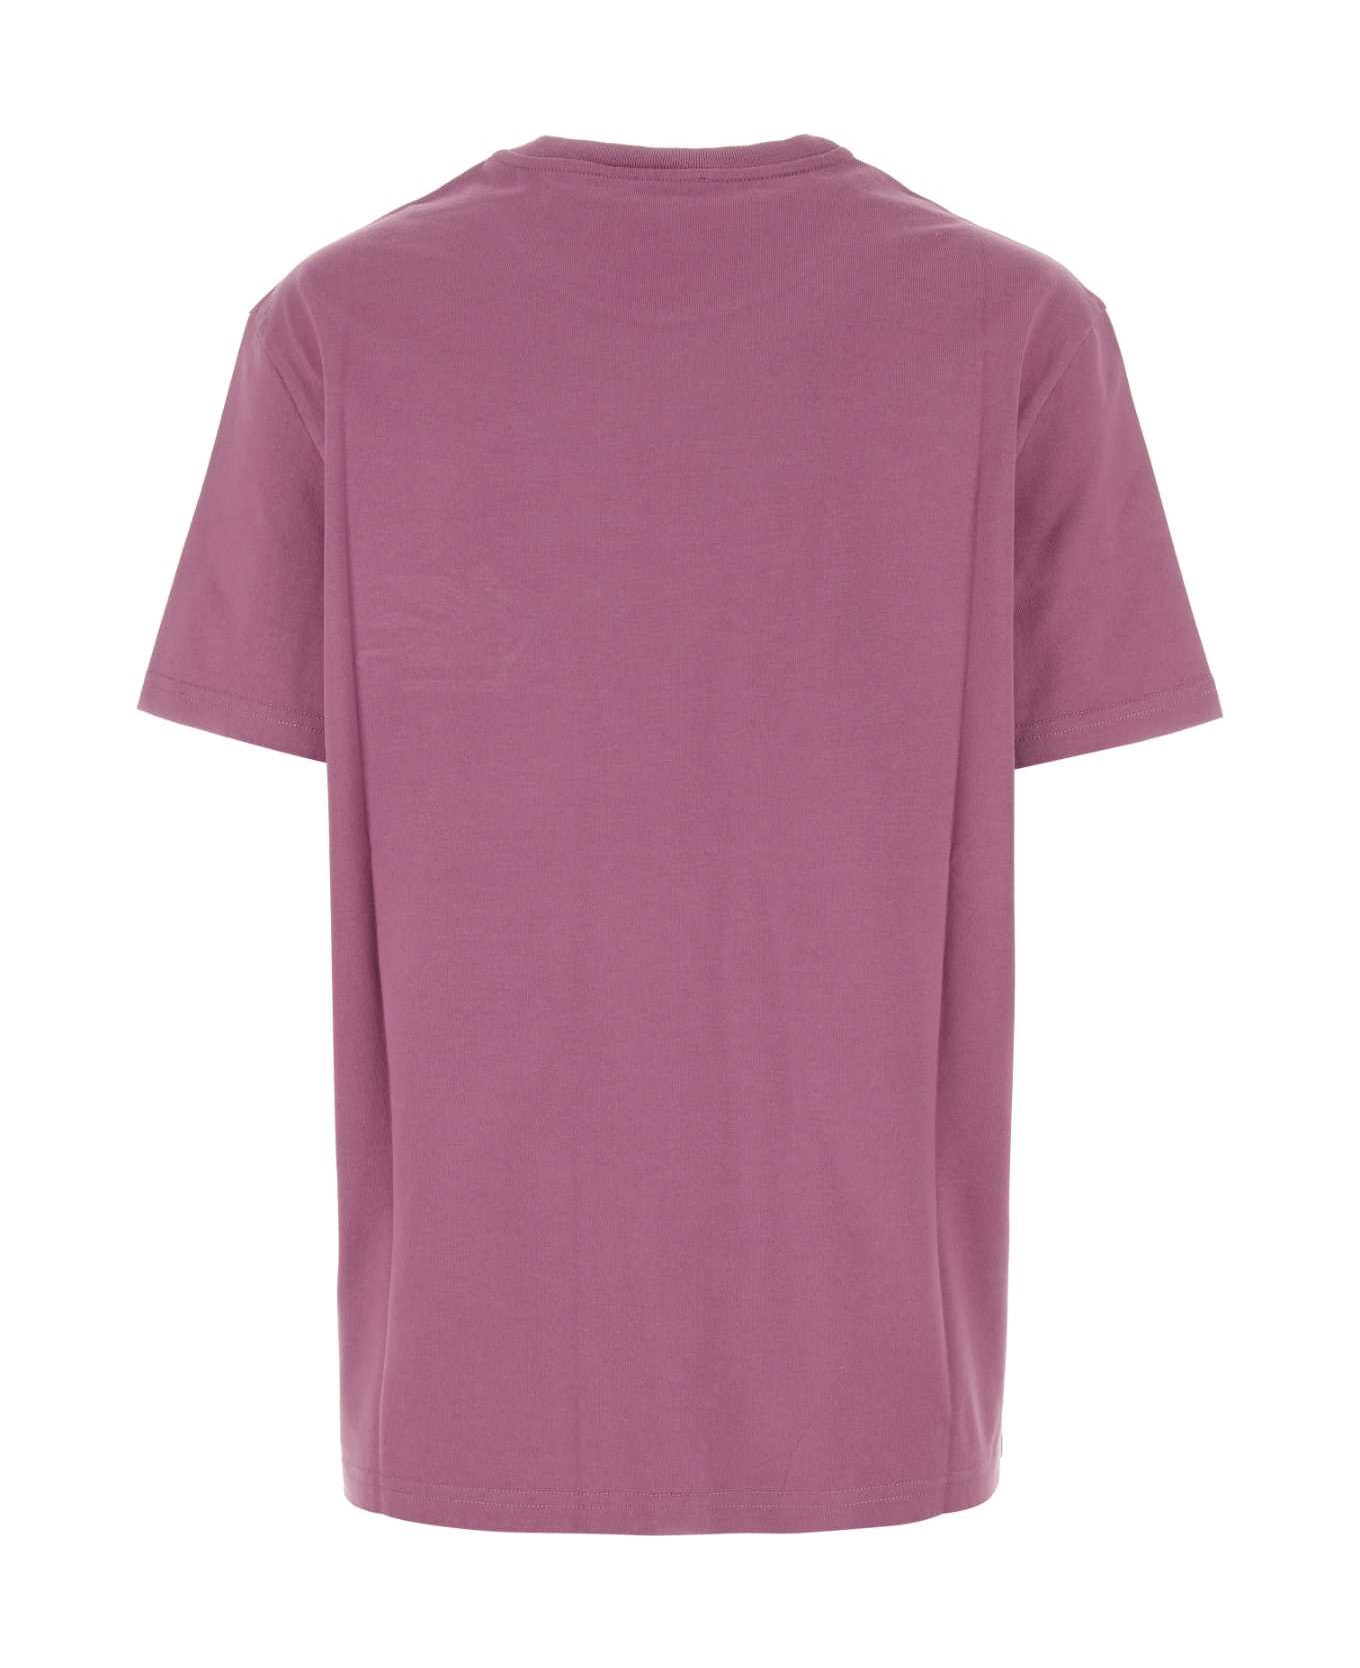 Etro Light Purple Cotton T-shirt - PINK